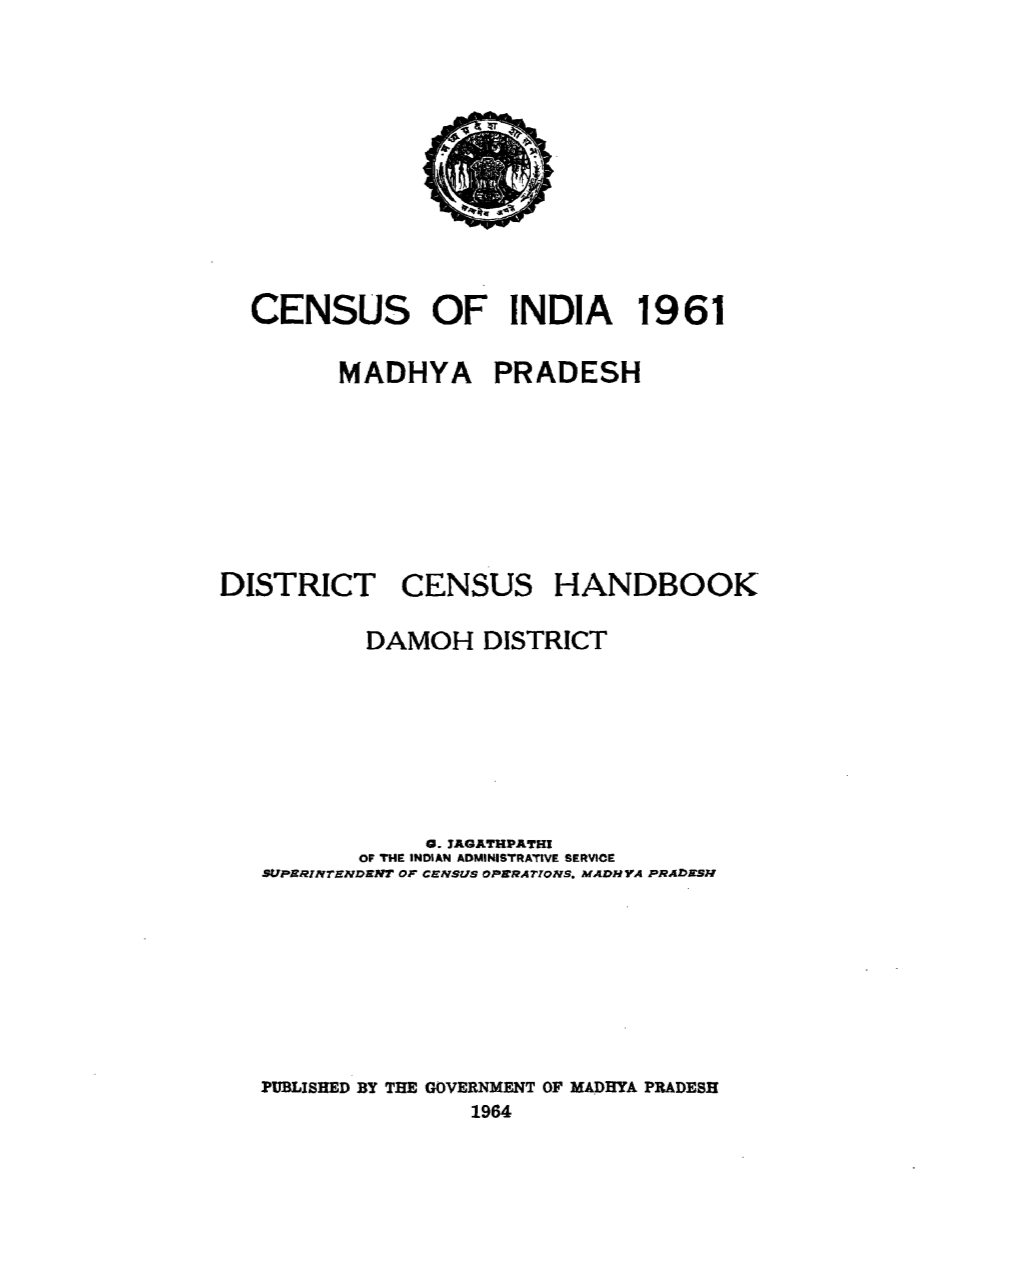 District Census Handbook, Damoh